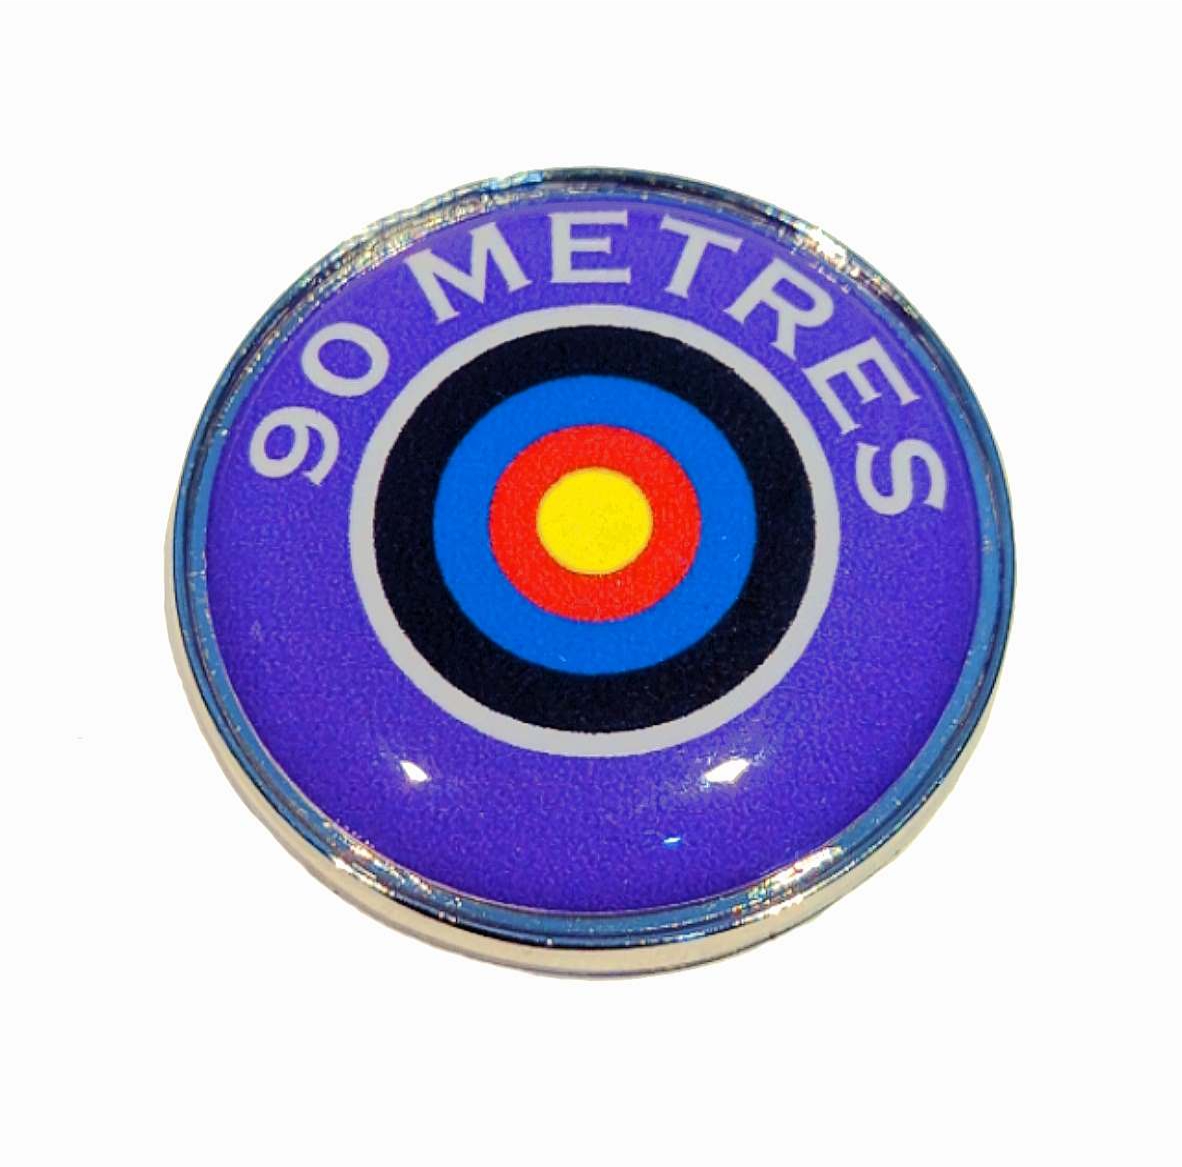 Metres standard badge